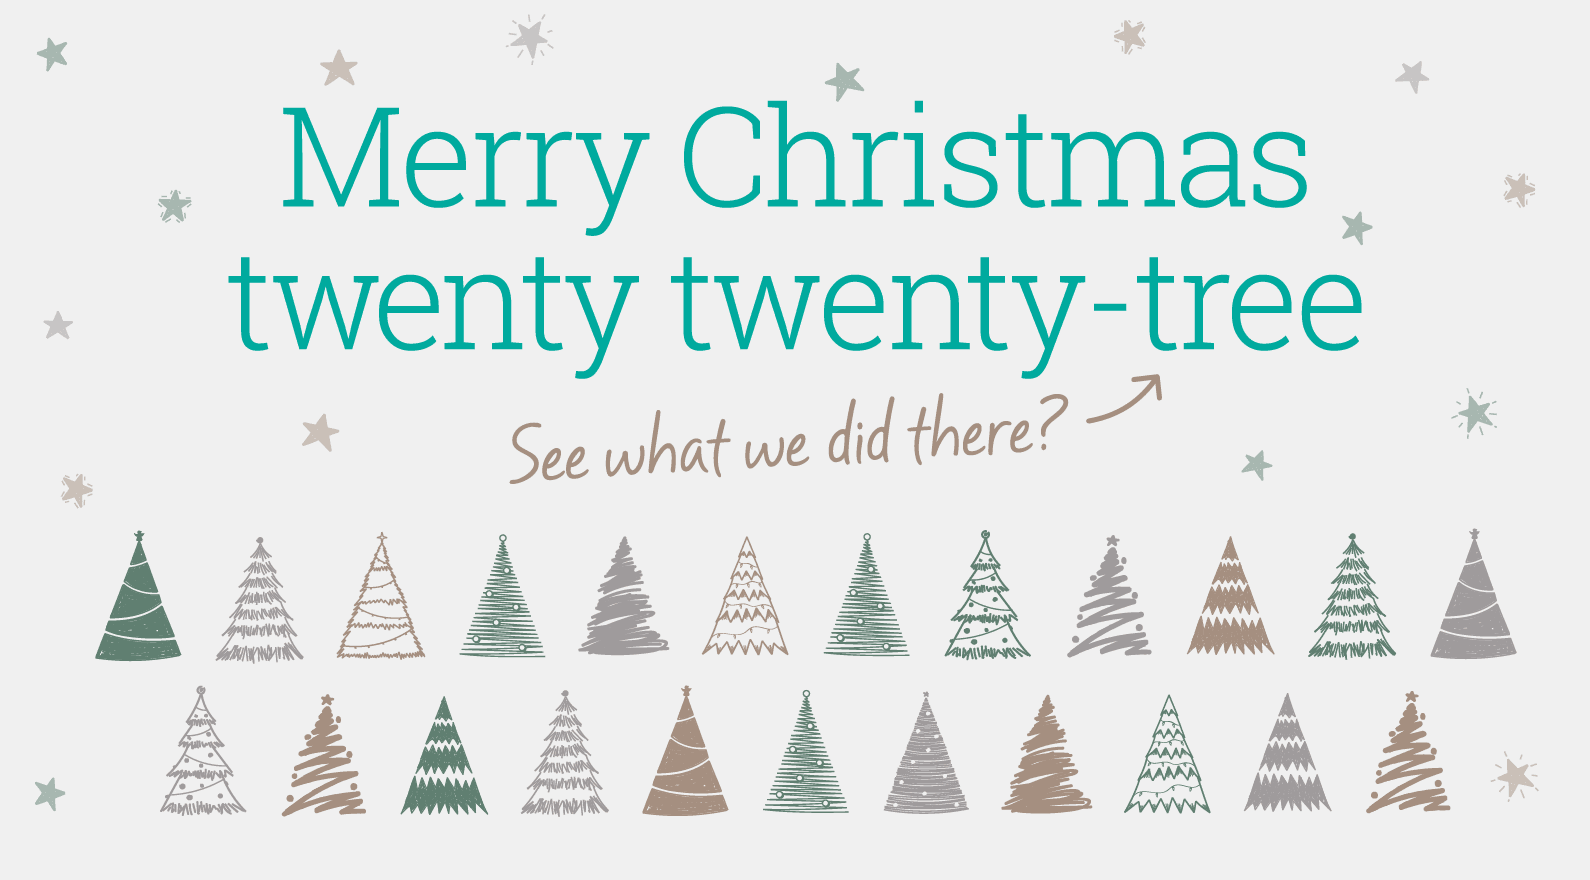 Merry Christmas Twenty Twenty-tree (see what we did there...?!)